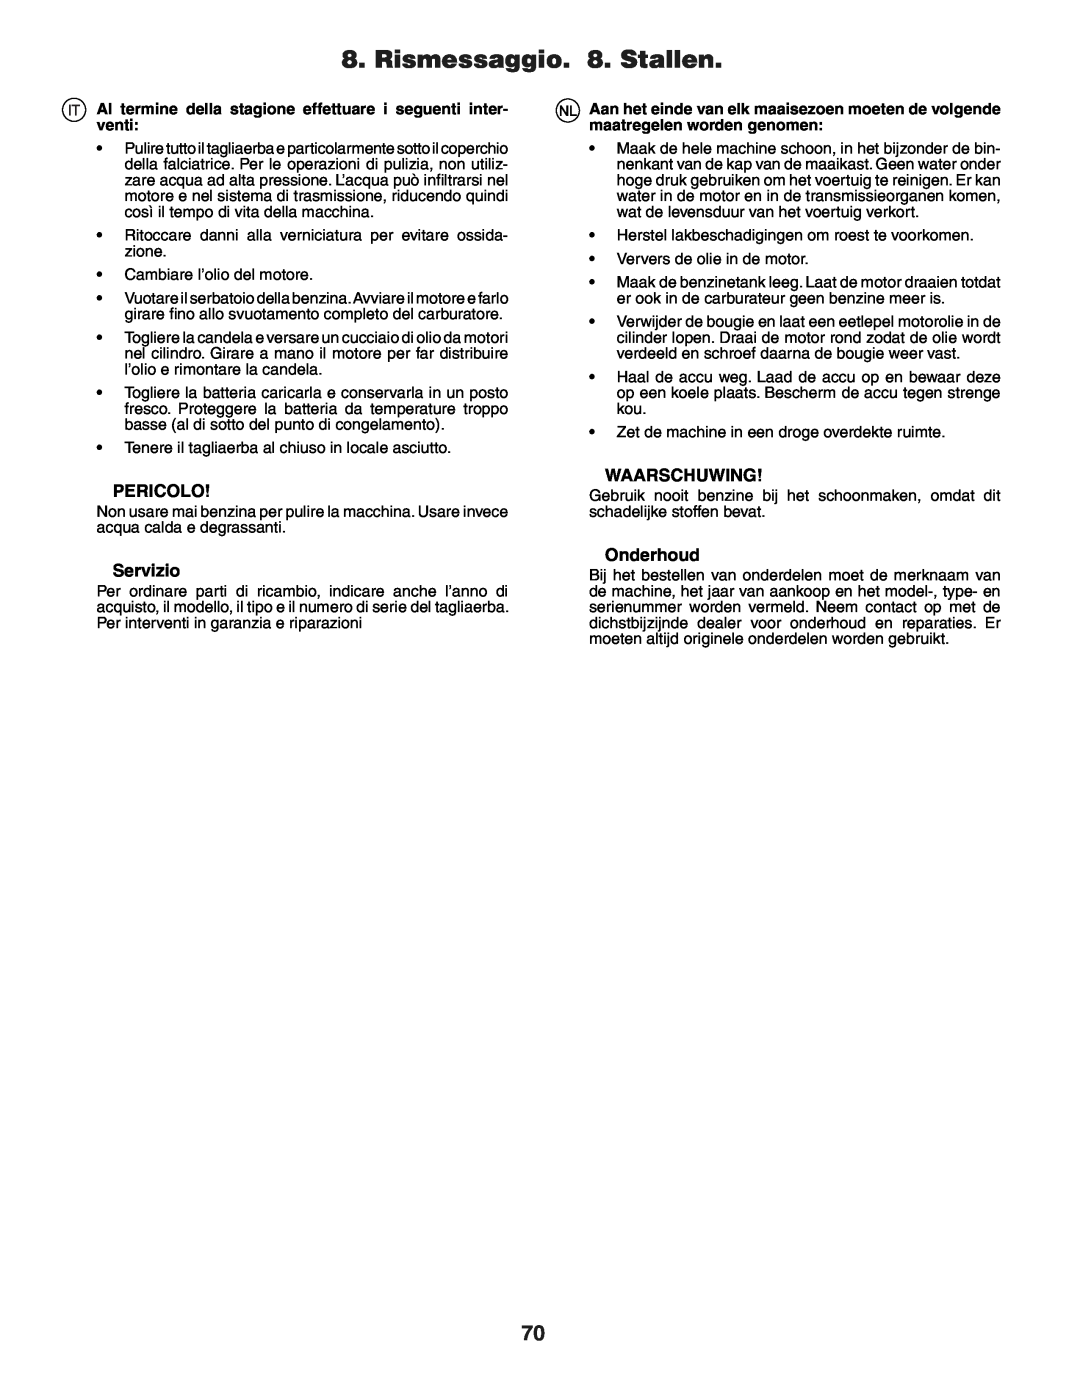 Husqvarna YTH151 instruction manual Rismessaggio. 8. Stallen, Pericolo, Servizio, Waarschuwing, Onderhoud 